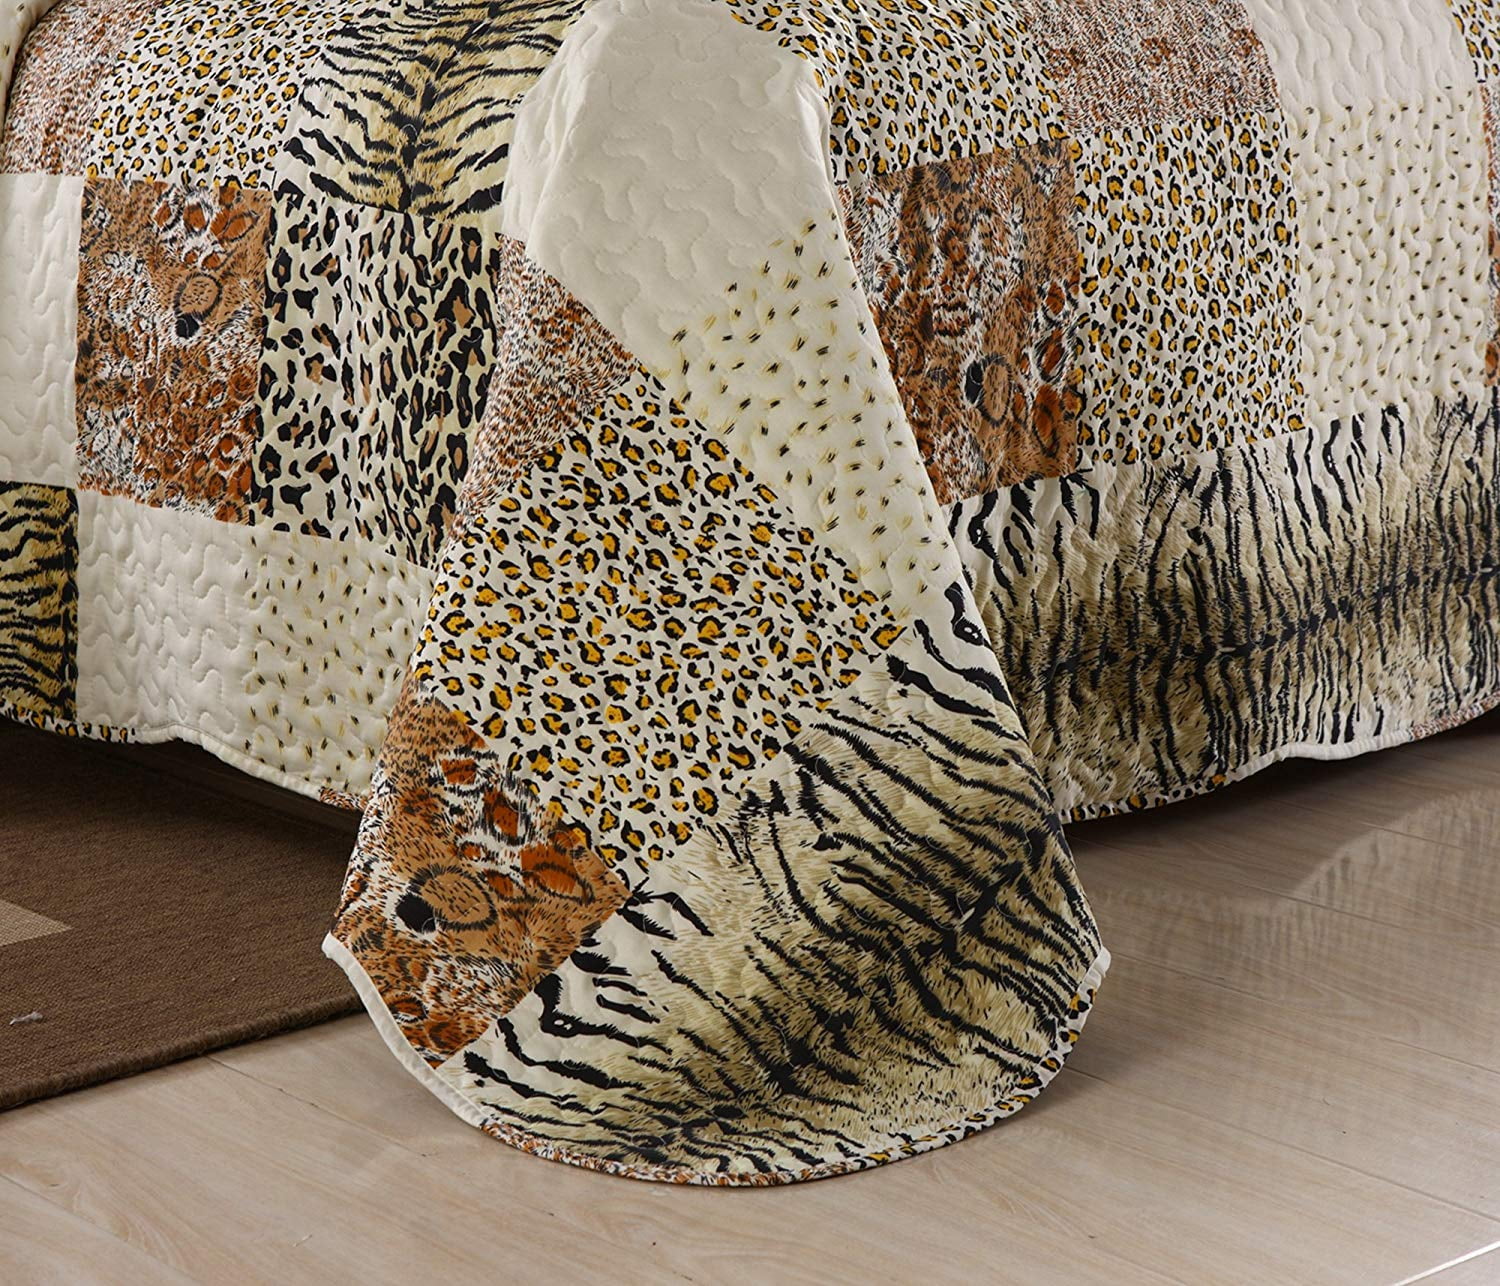 MarCielo 3 Piece Quilted Bedspread Leopard Print Quilt Quilt Set Bedding  Throw Blanket Coverlet Animal Print Bedspread Ensemble Cheetah (Queen)